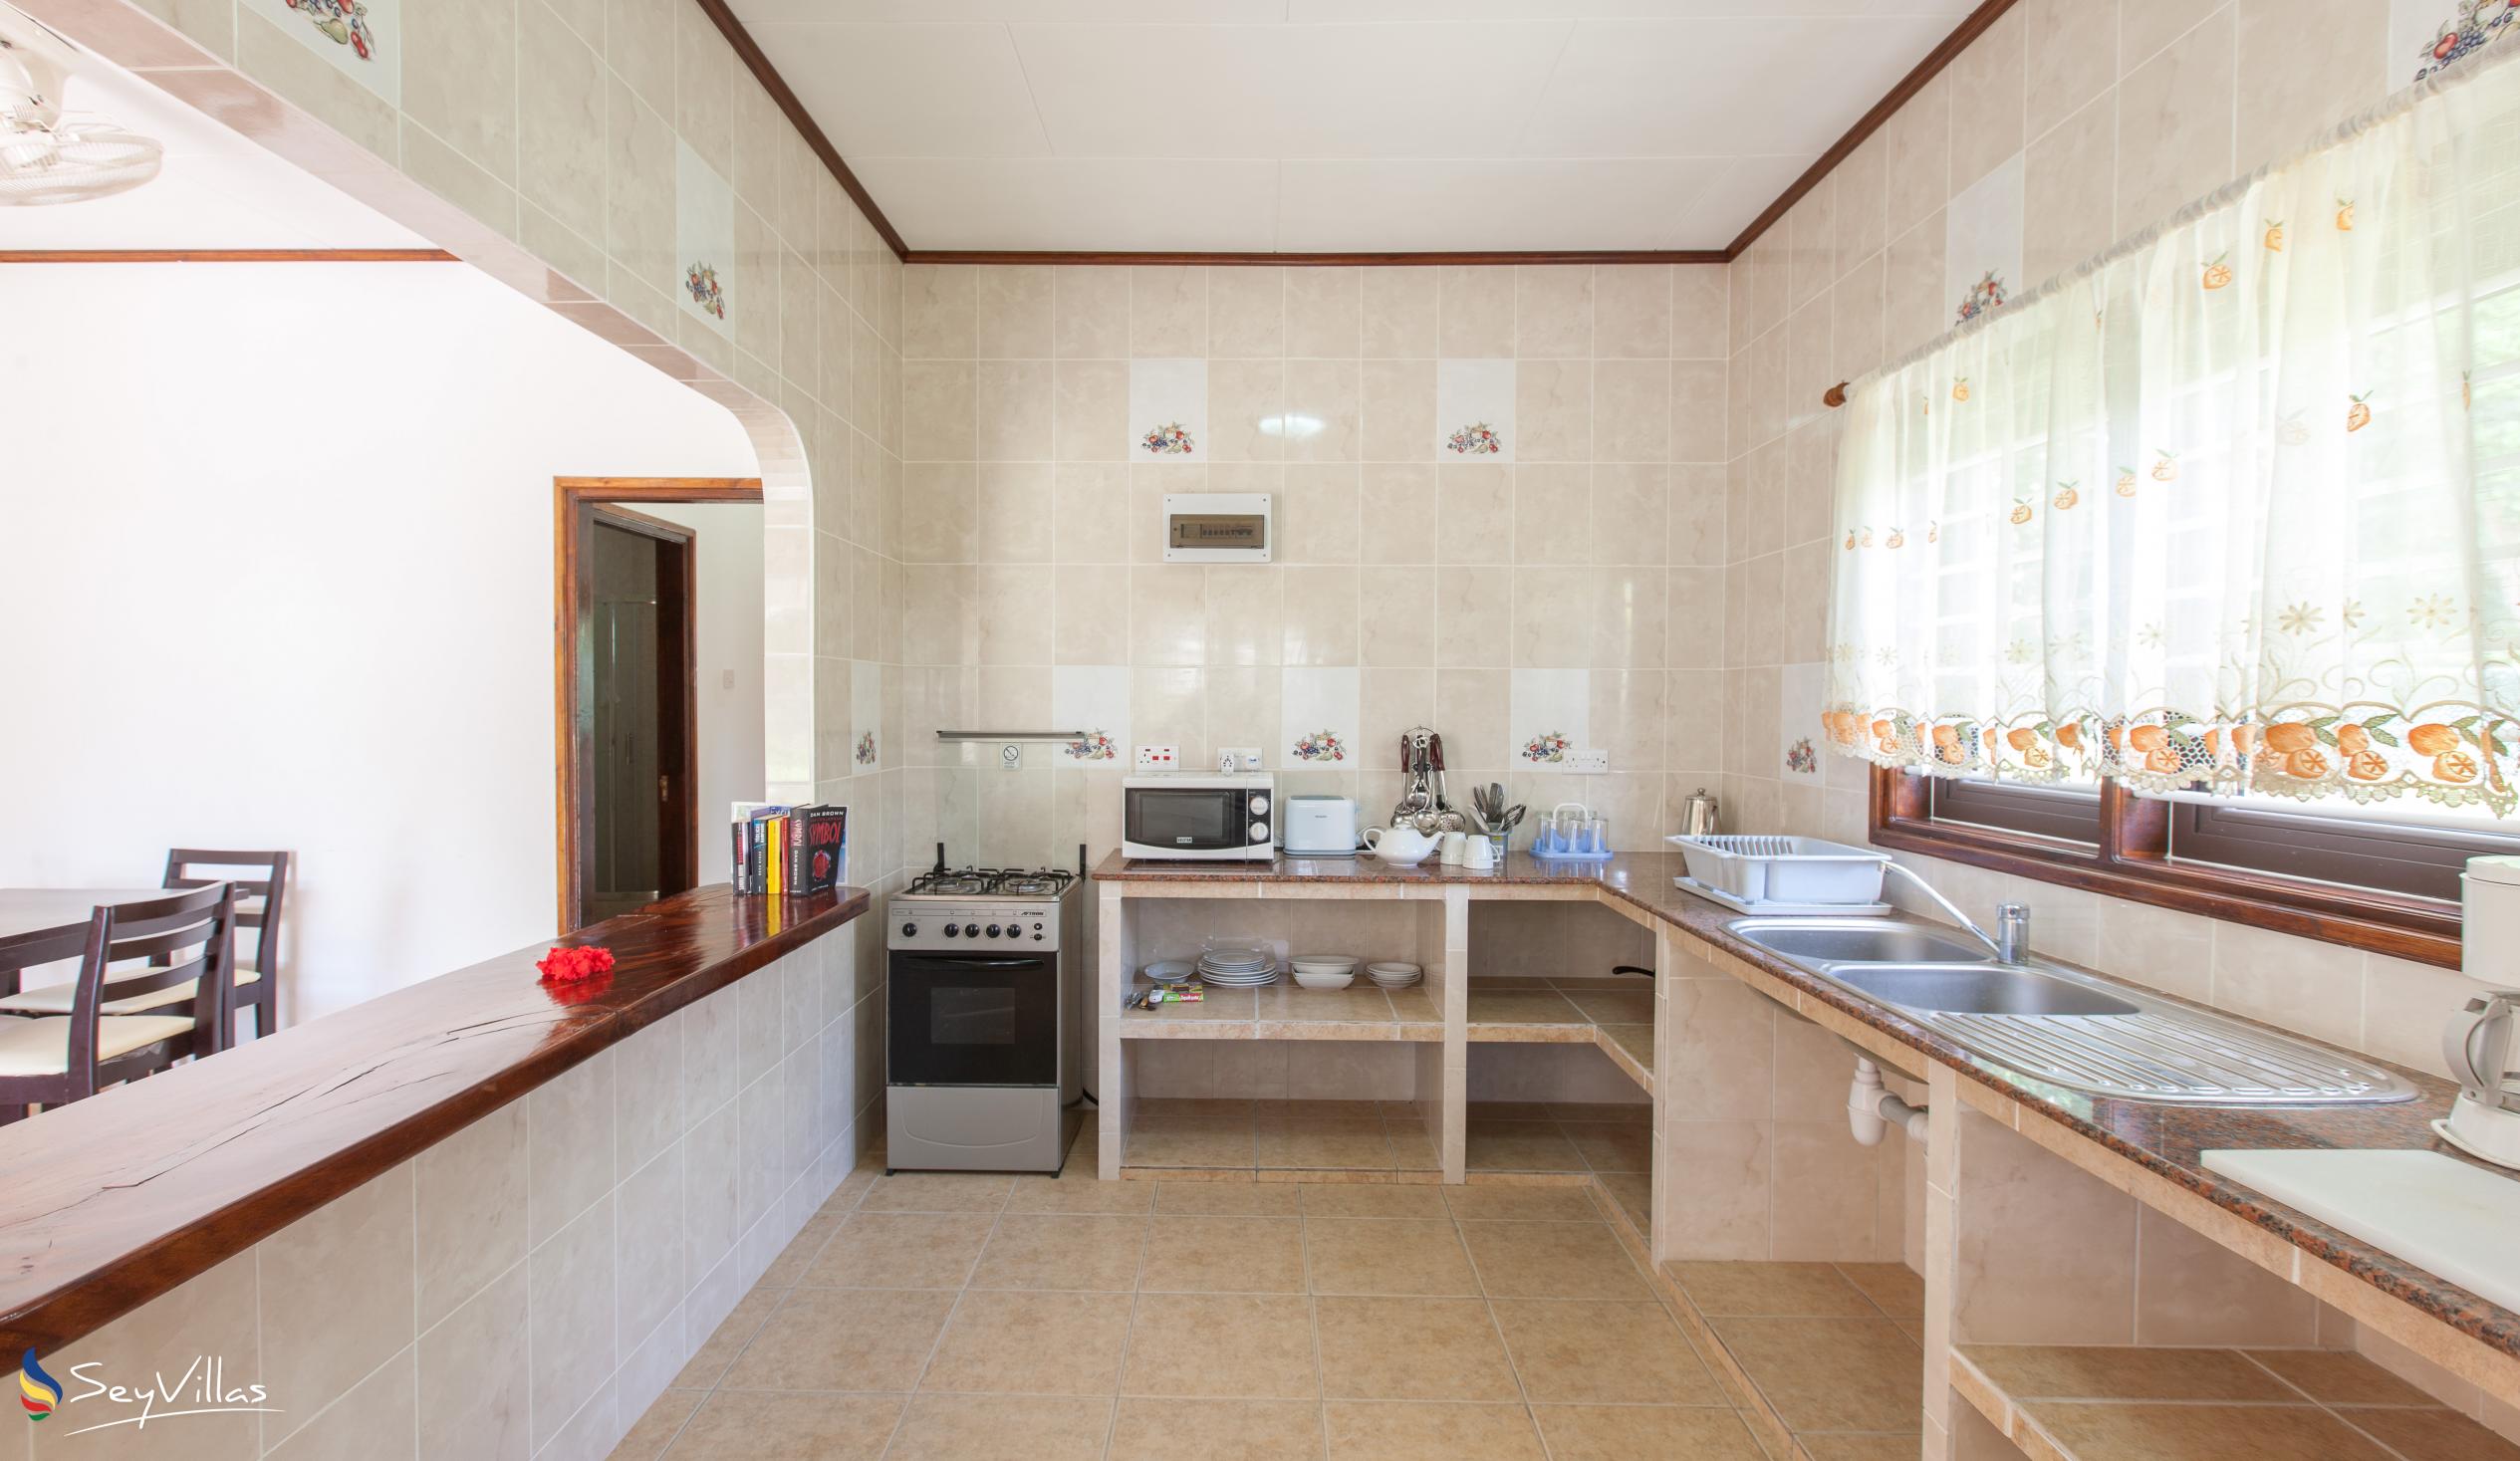 Foto 40: Zerof Self Catering  Apartments - Bungalow mit 2 Schlafzimmern - La Digue (Seychellen)